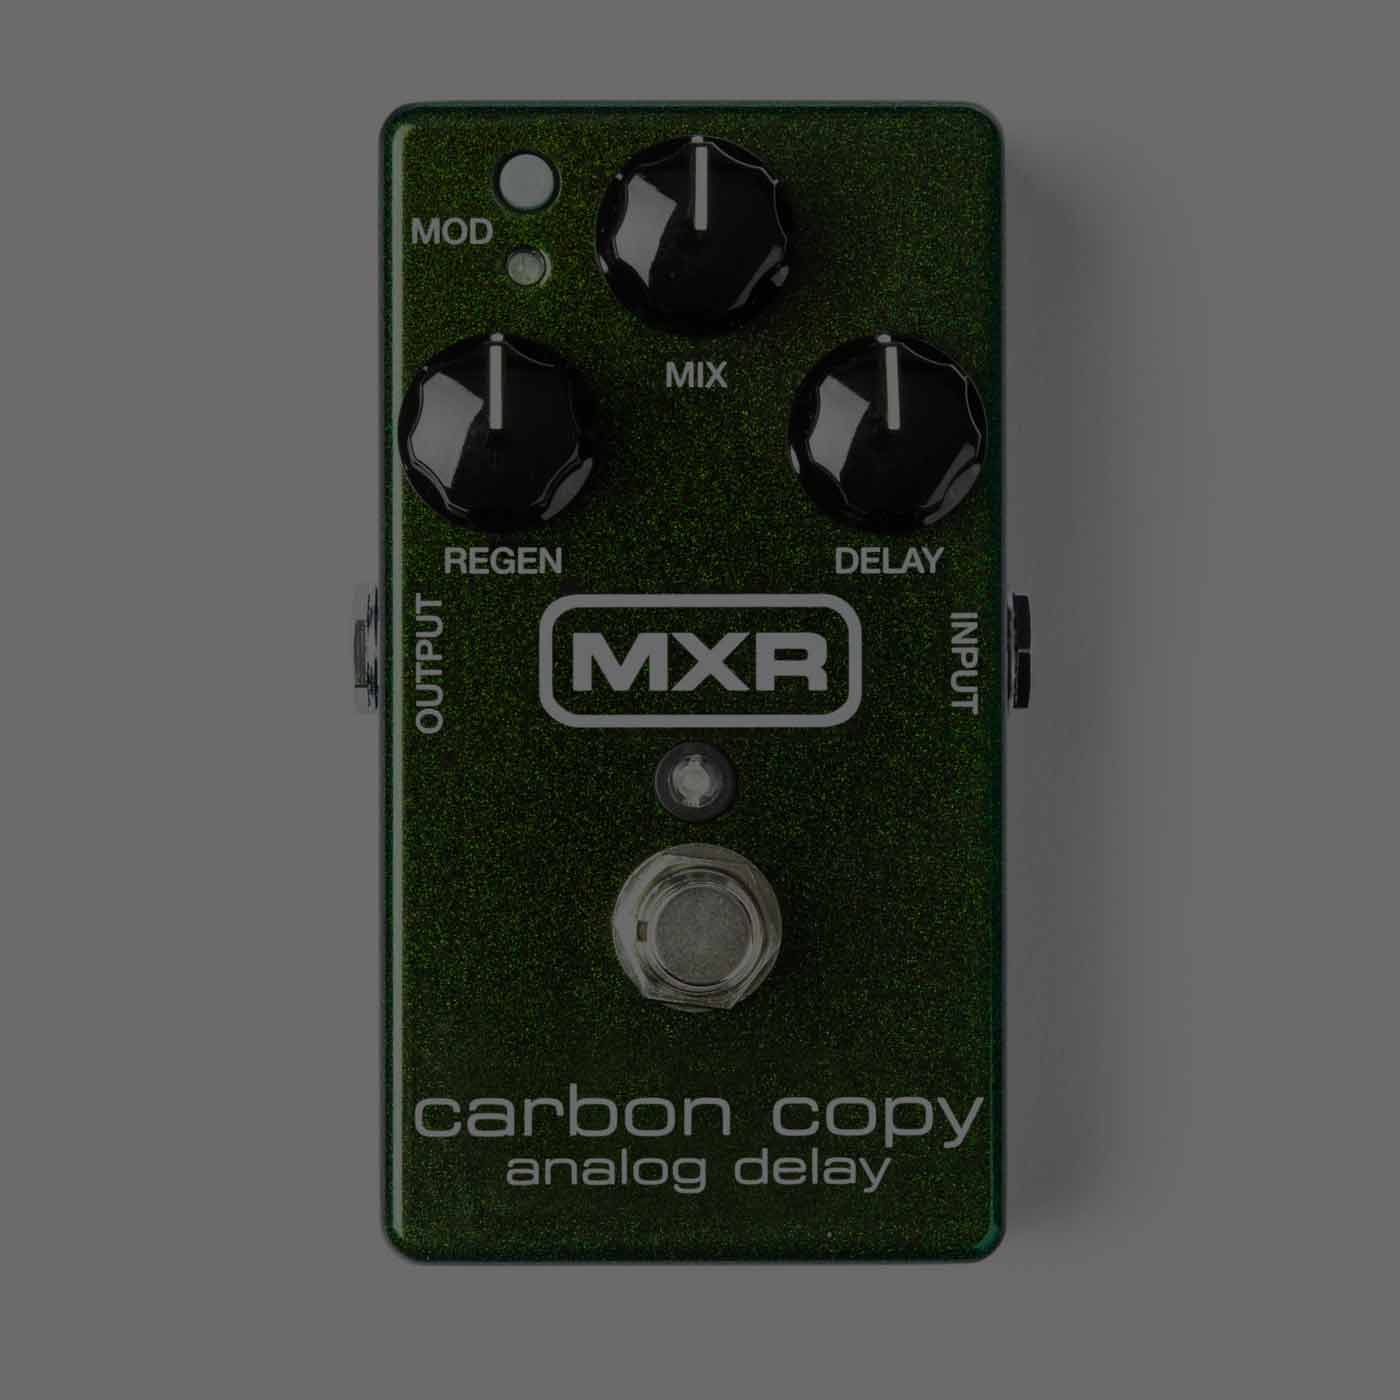 MXR Carbon Copy Analog Delay Review